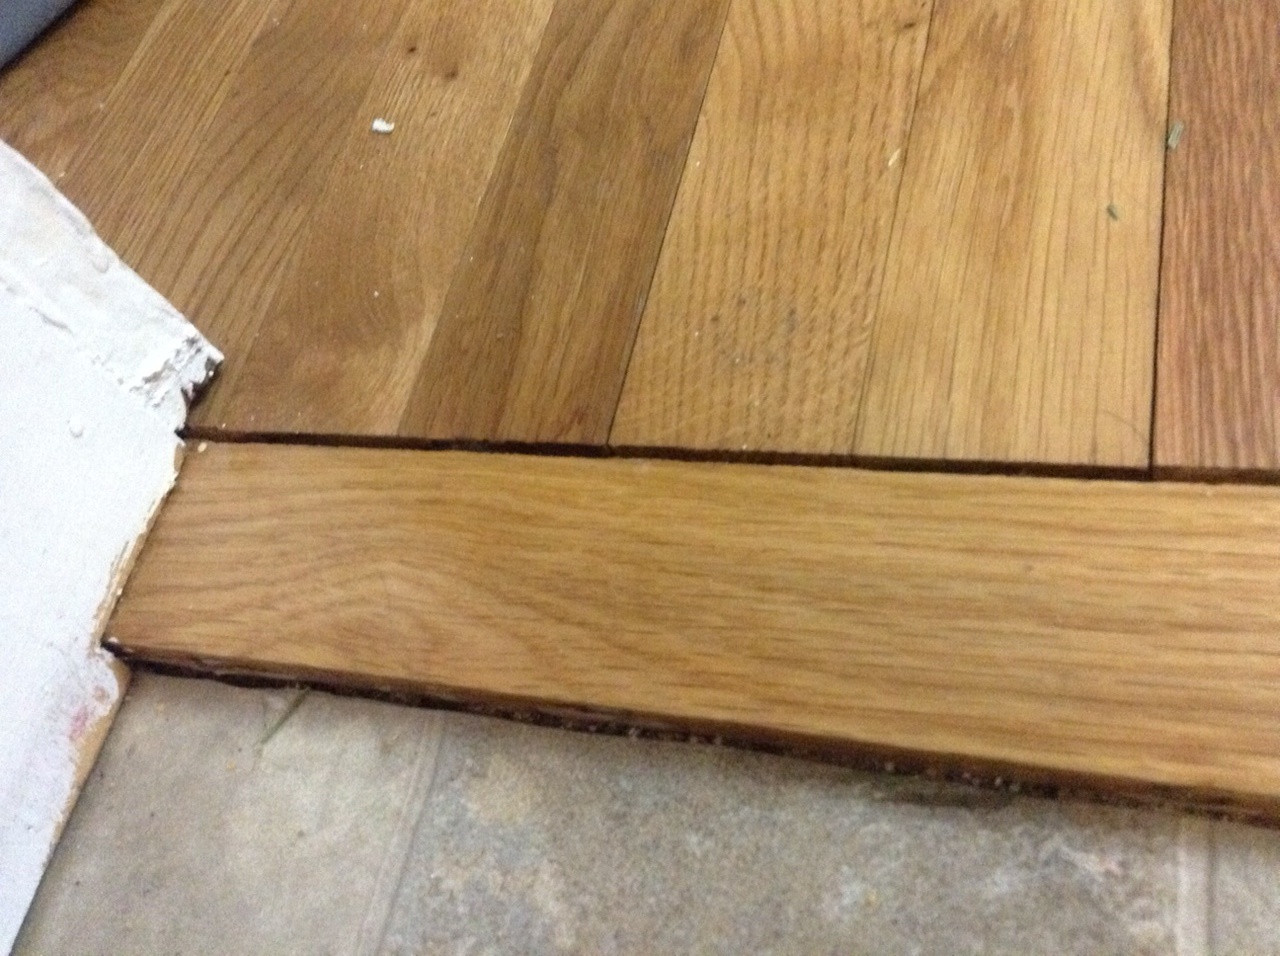 hardwood floor installation pittsburgh of wood floor techniques 101 regarding gap shrinkage cork